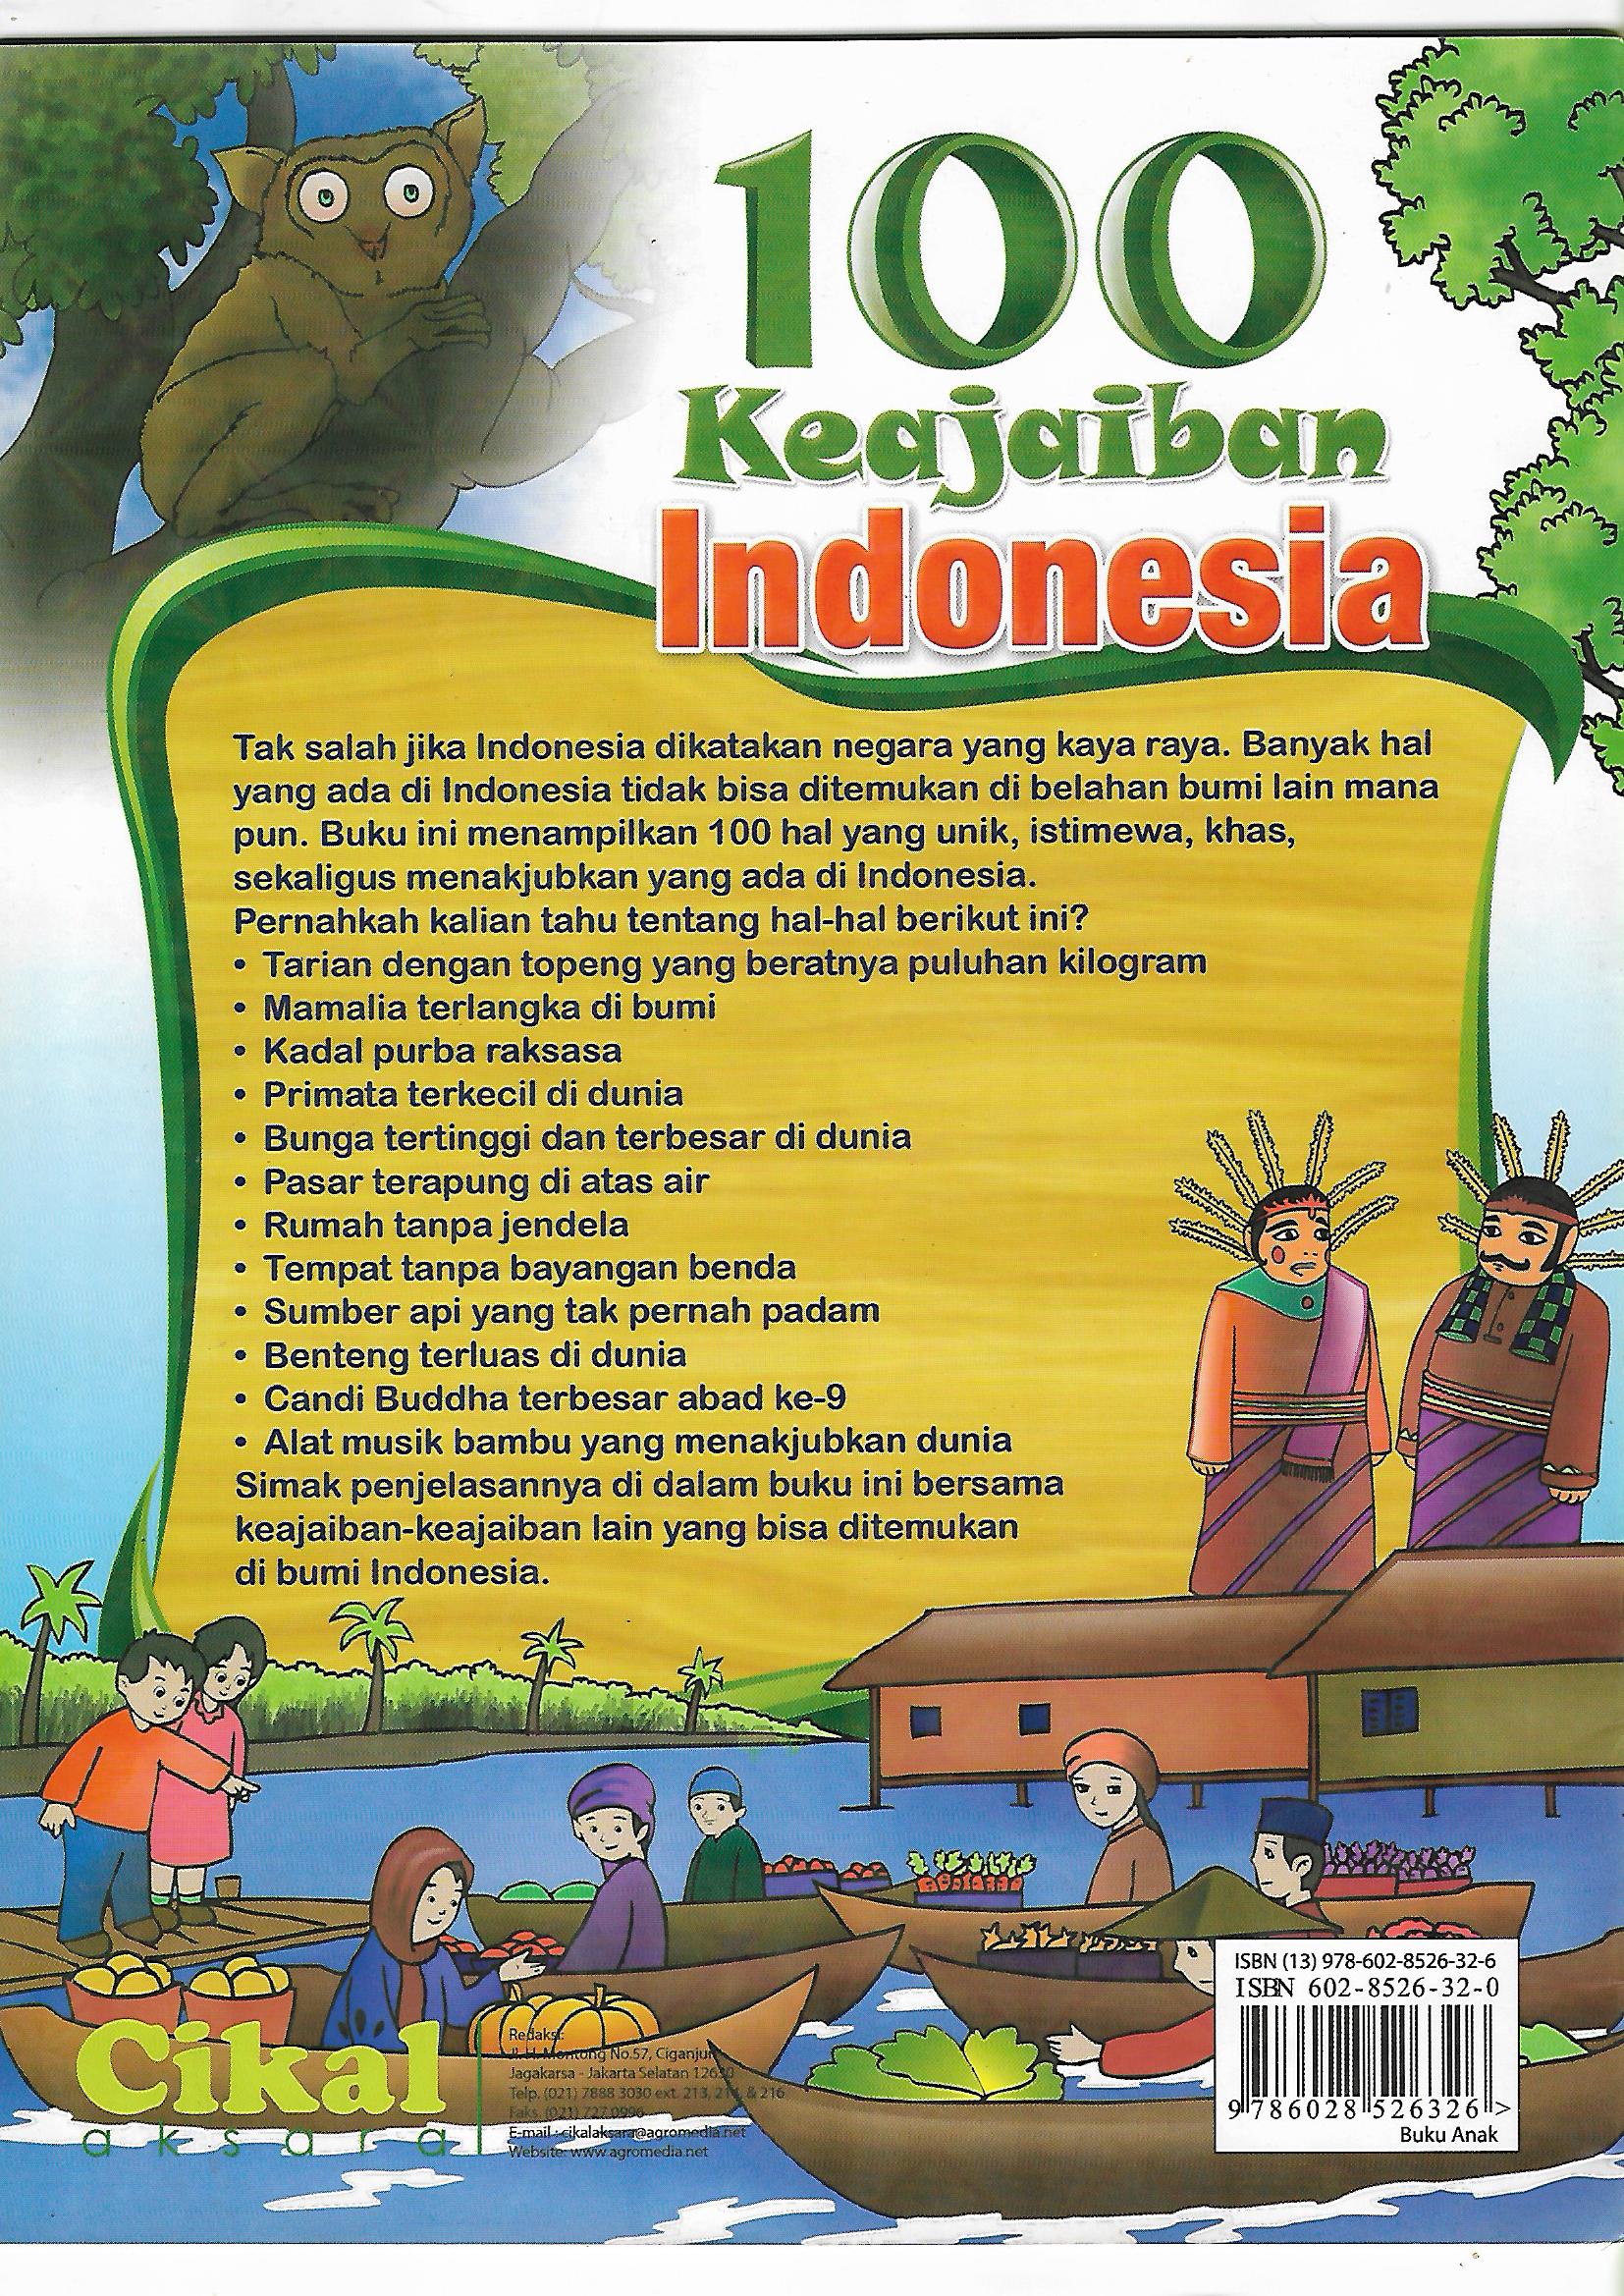 Download Ebook Anak Legal: 100 Keajaiban Indonesia